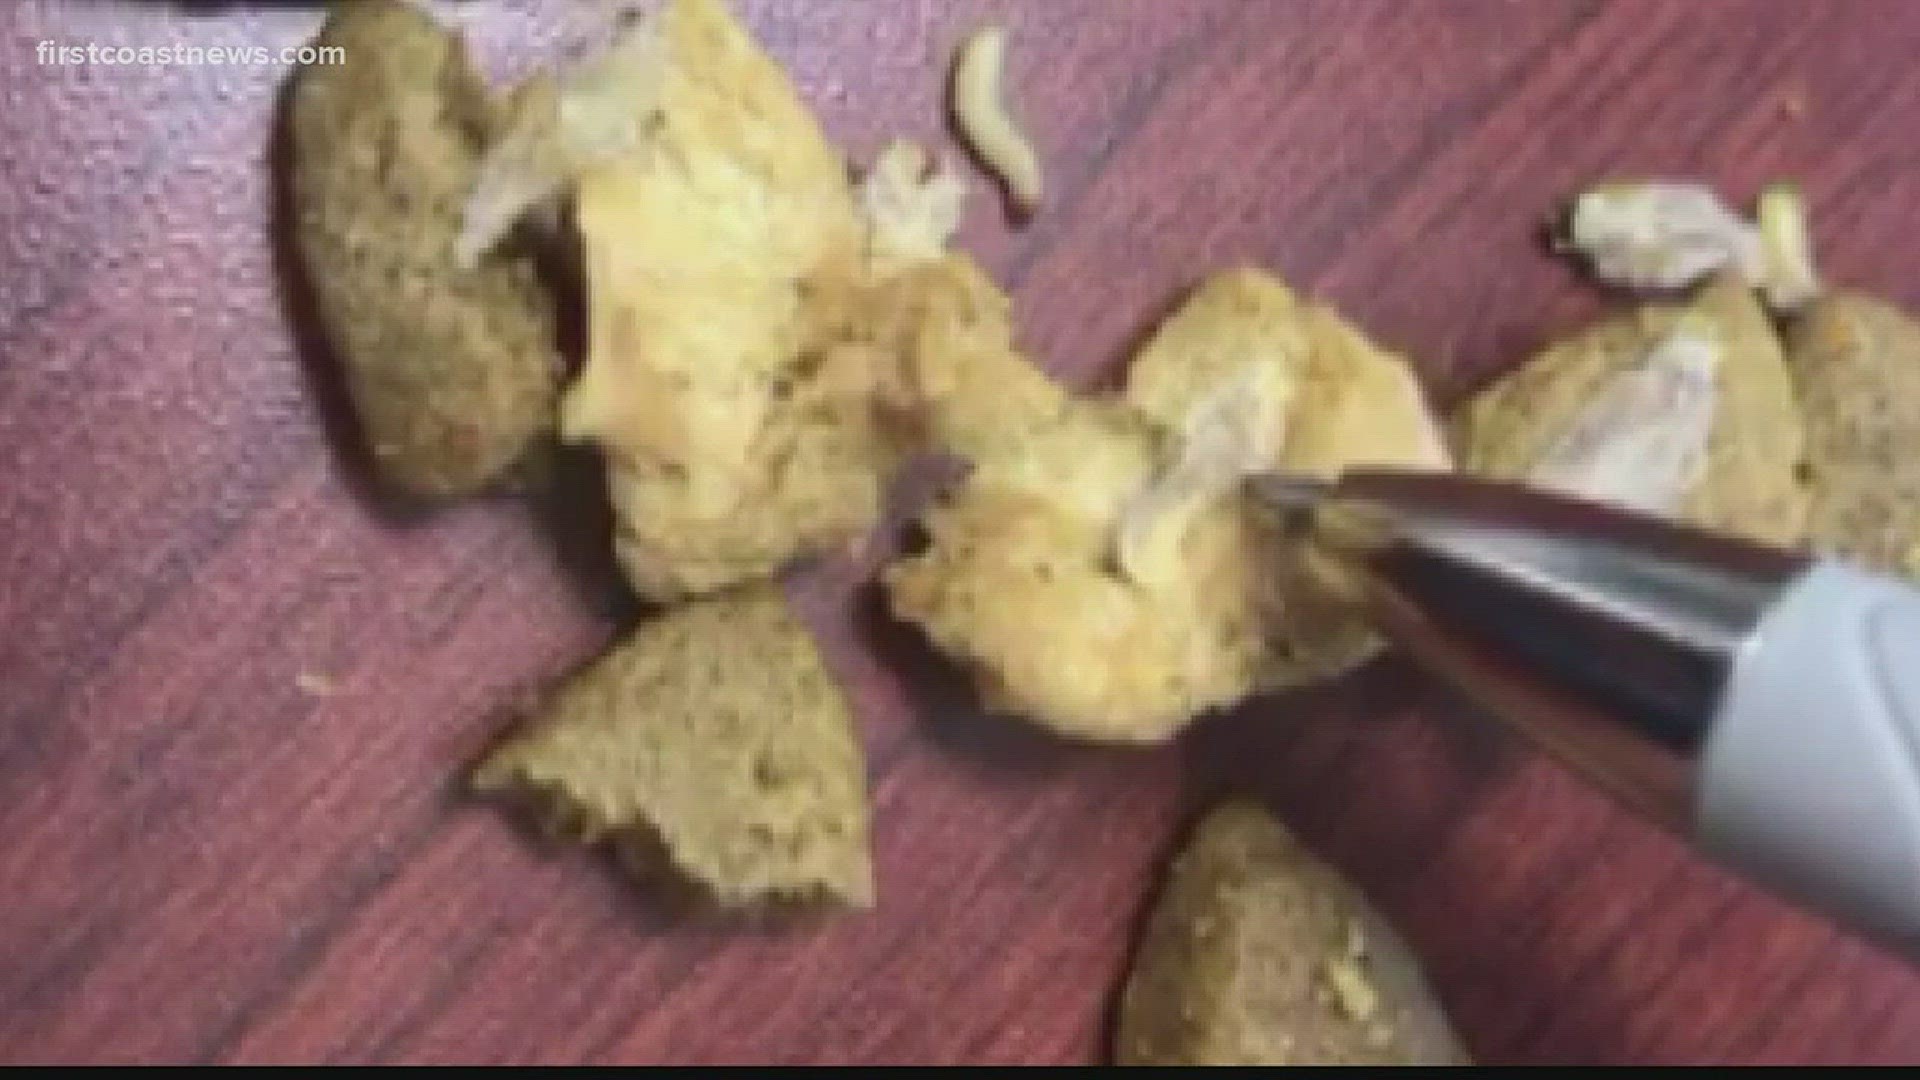 Florida man finds 'maggots' in dog food